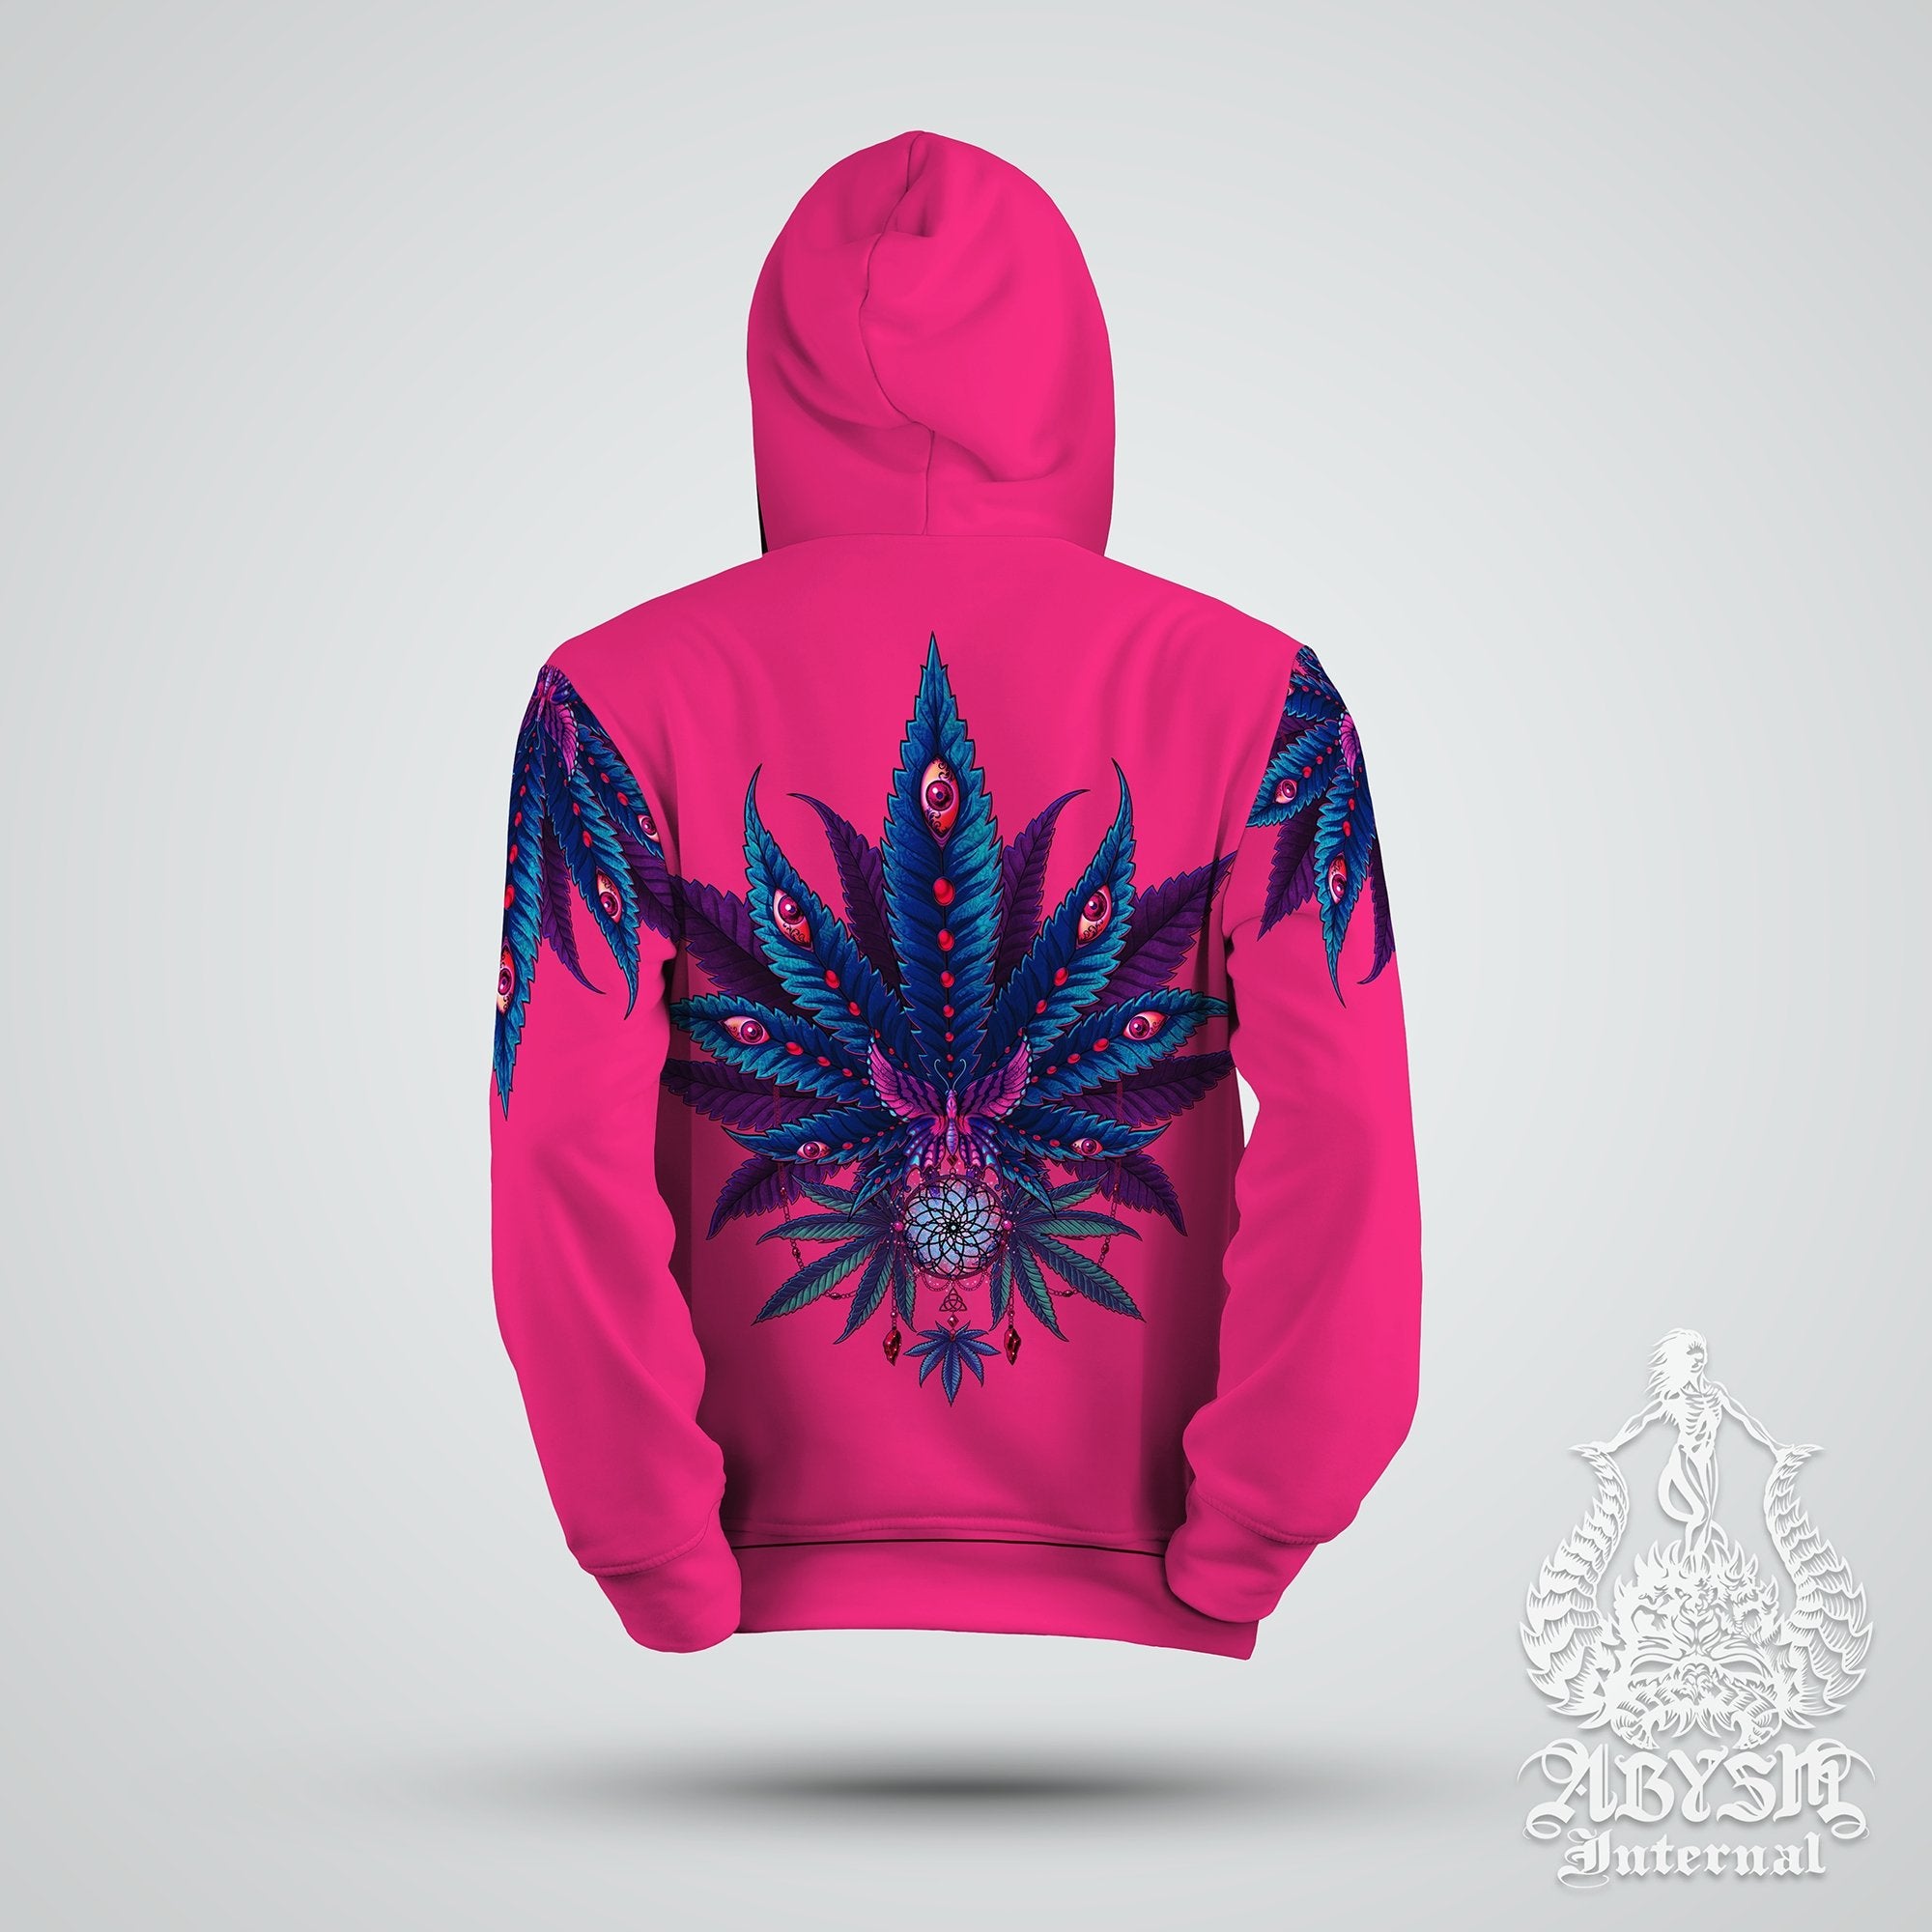 Weed Hoodie, Cannabis Festival, Trippy Outfit, Indie Streetwear, Alternative Clothing, Unisex, 420 Gift - Neon I Pink, Marijuana - Abysm Internal